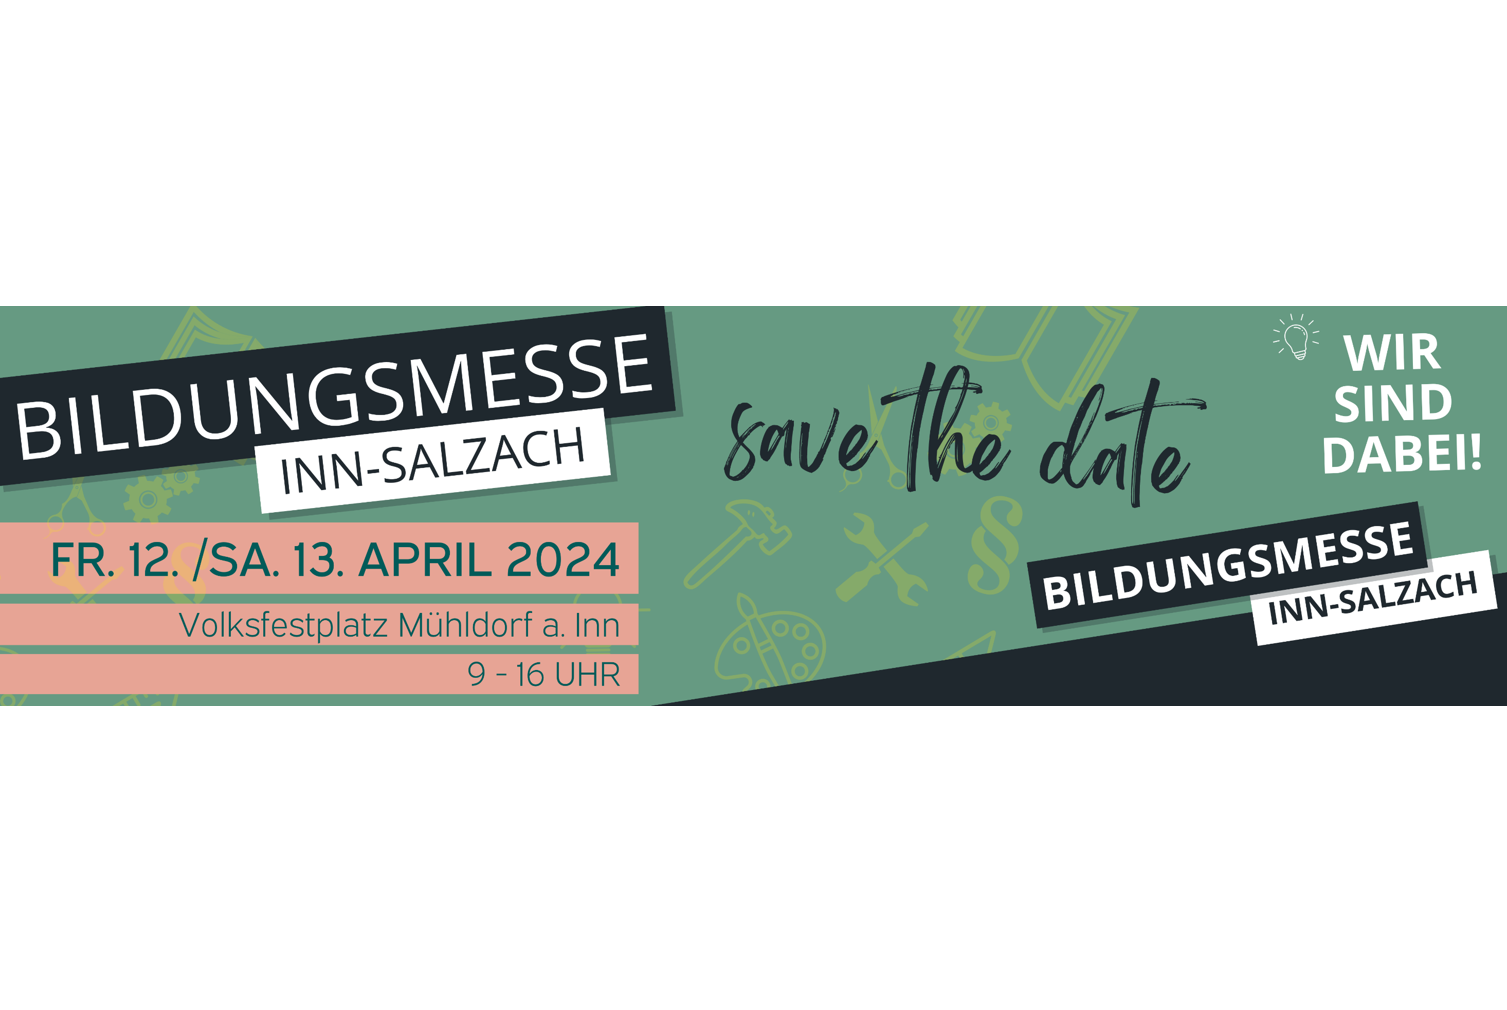 Bildungsmesse Inn-Salzach 2024 - Save the date!